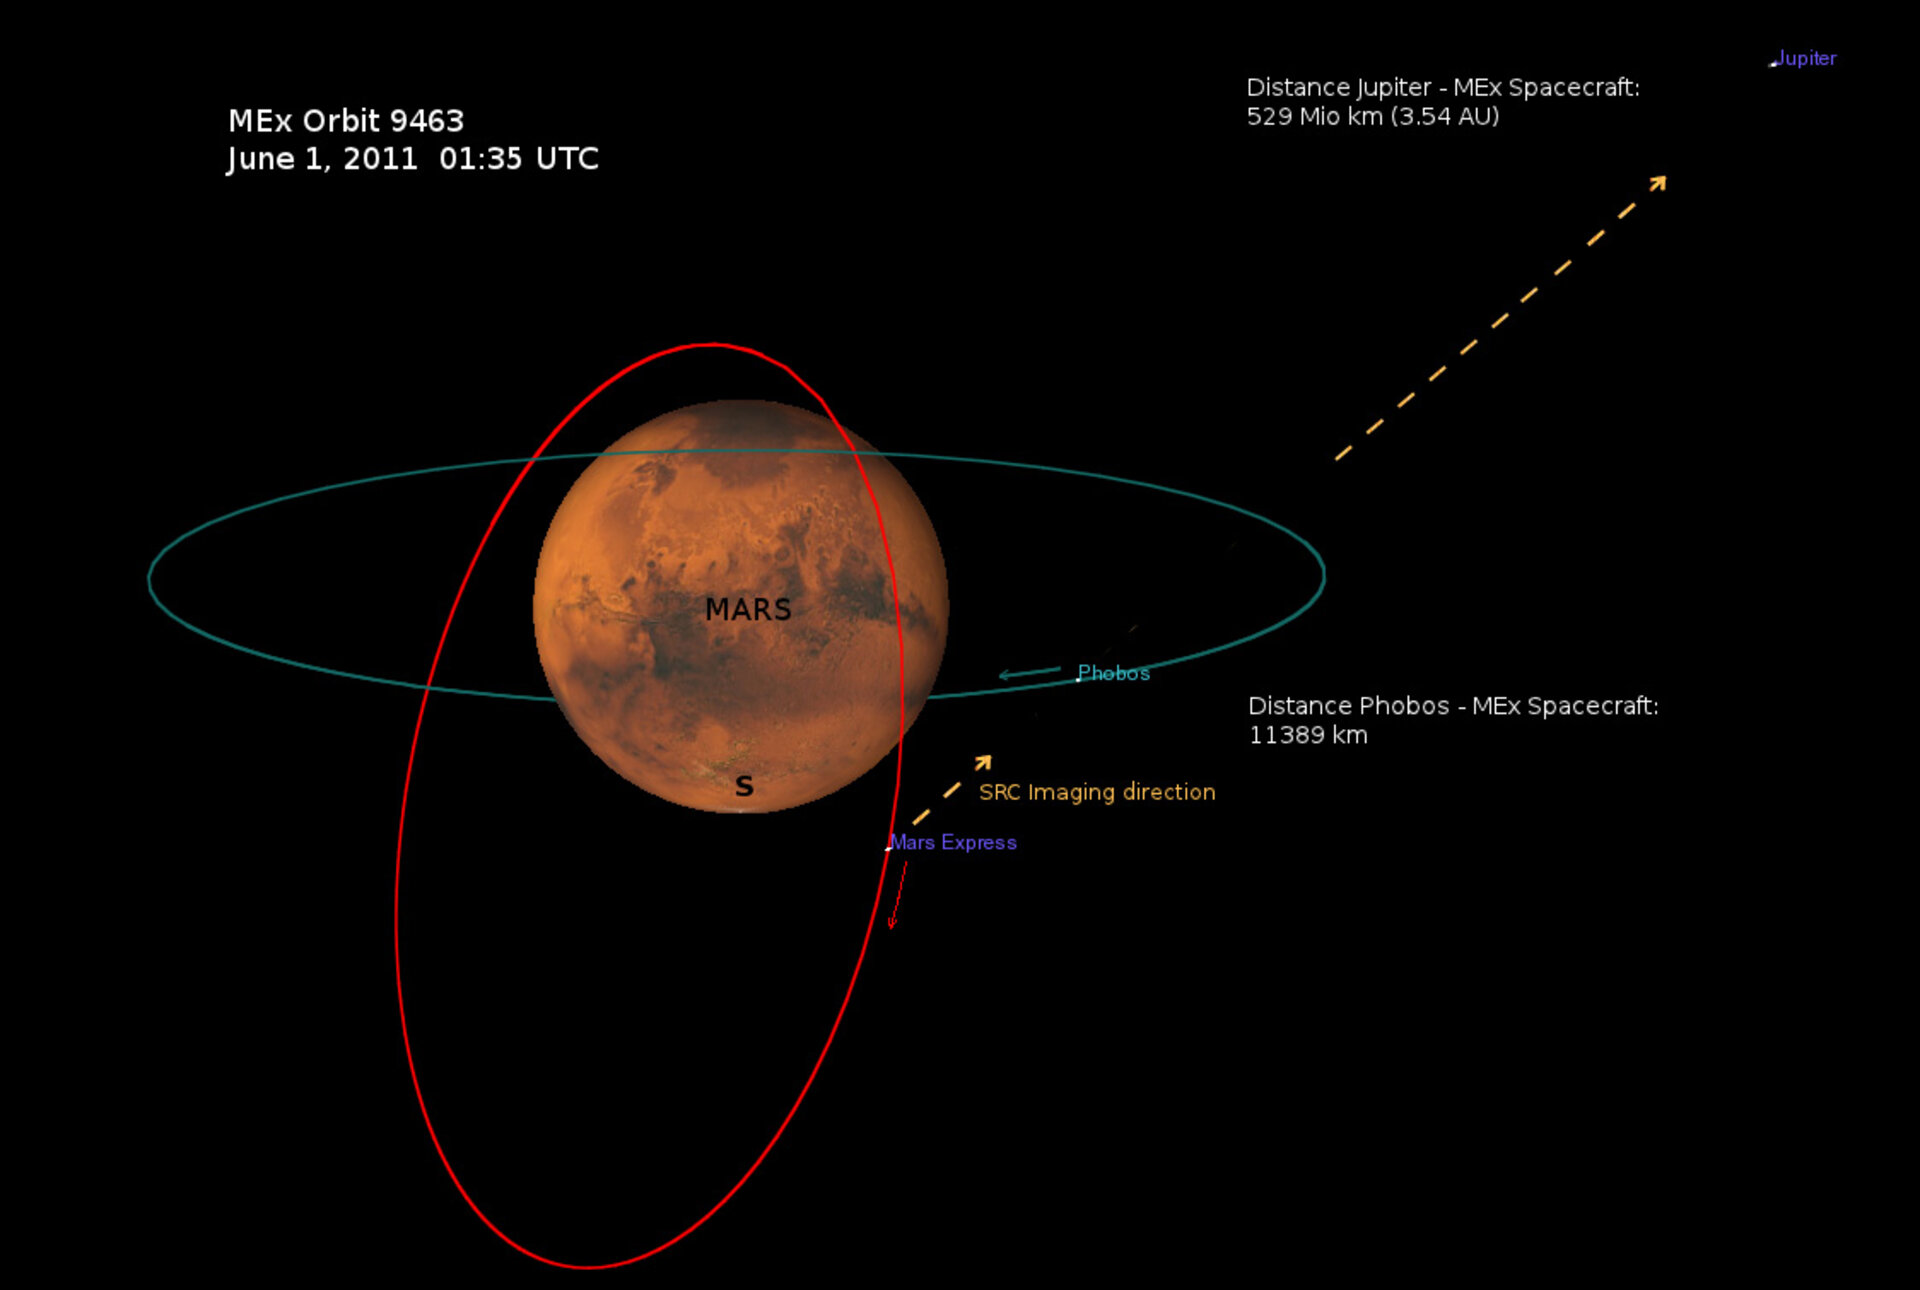 Paths of Phobos and Mars Express